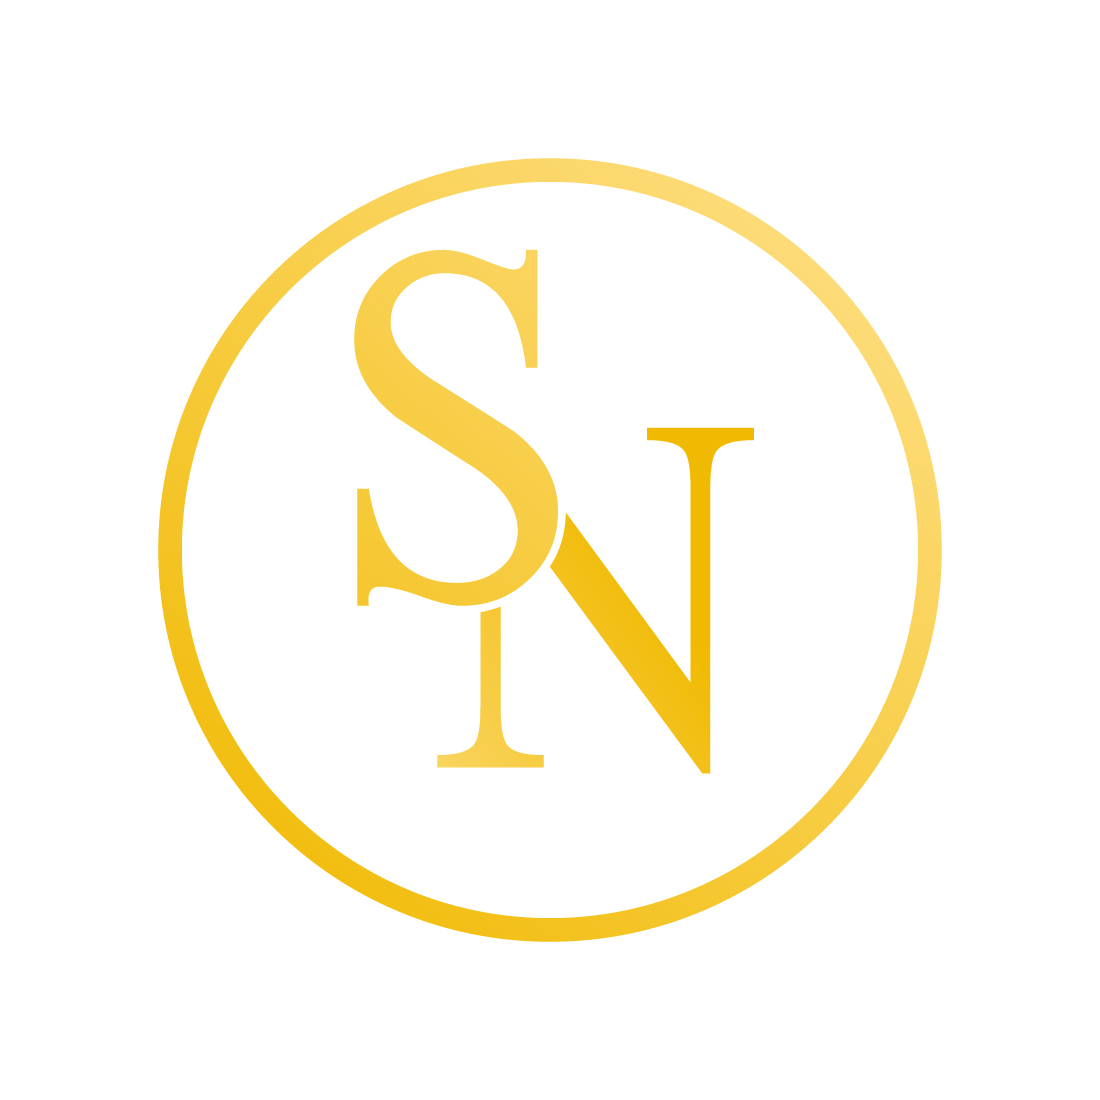 Luxury SN logo design vector icon SN letters logo design Golden color best logo NS golden color circle logo monogram company identity logo preview image.